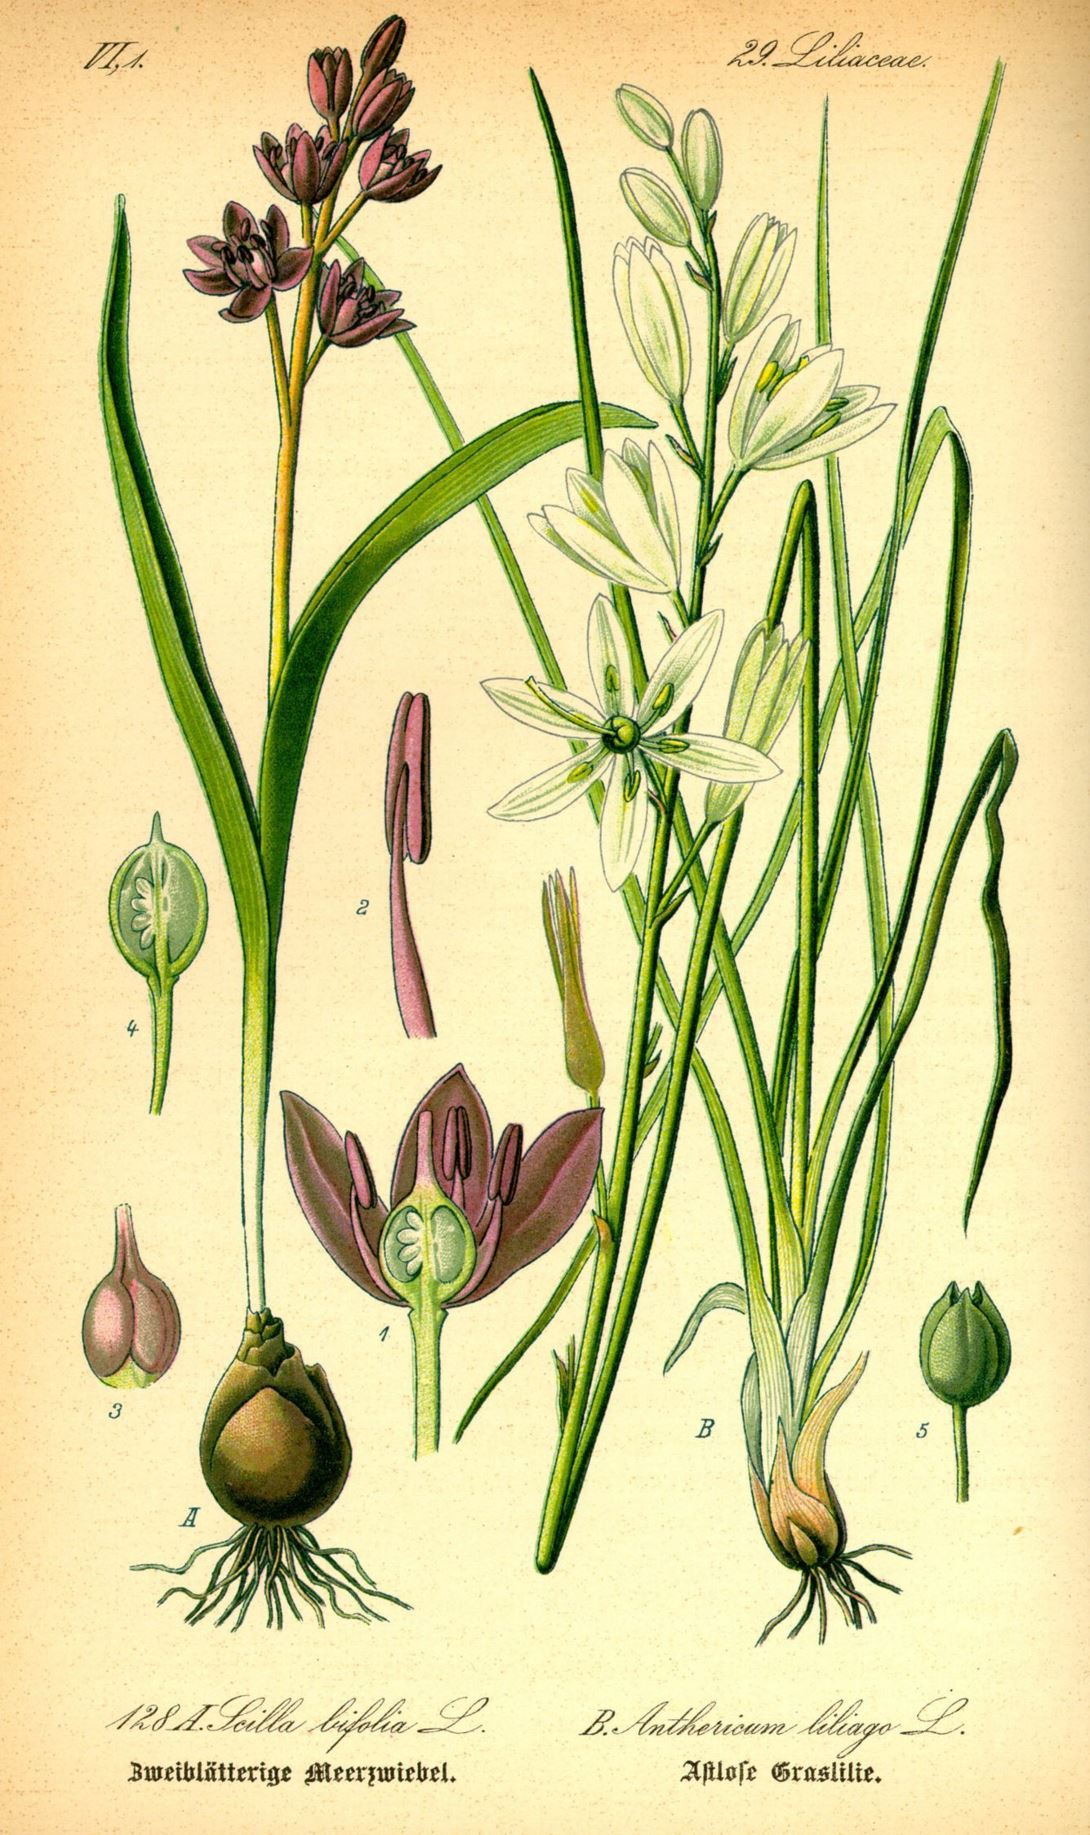 Anthericum liliago - Grote graslelie, St Bernard's lily